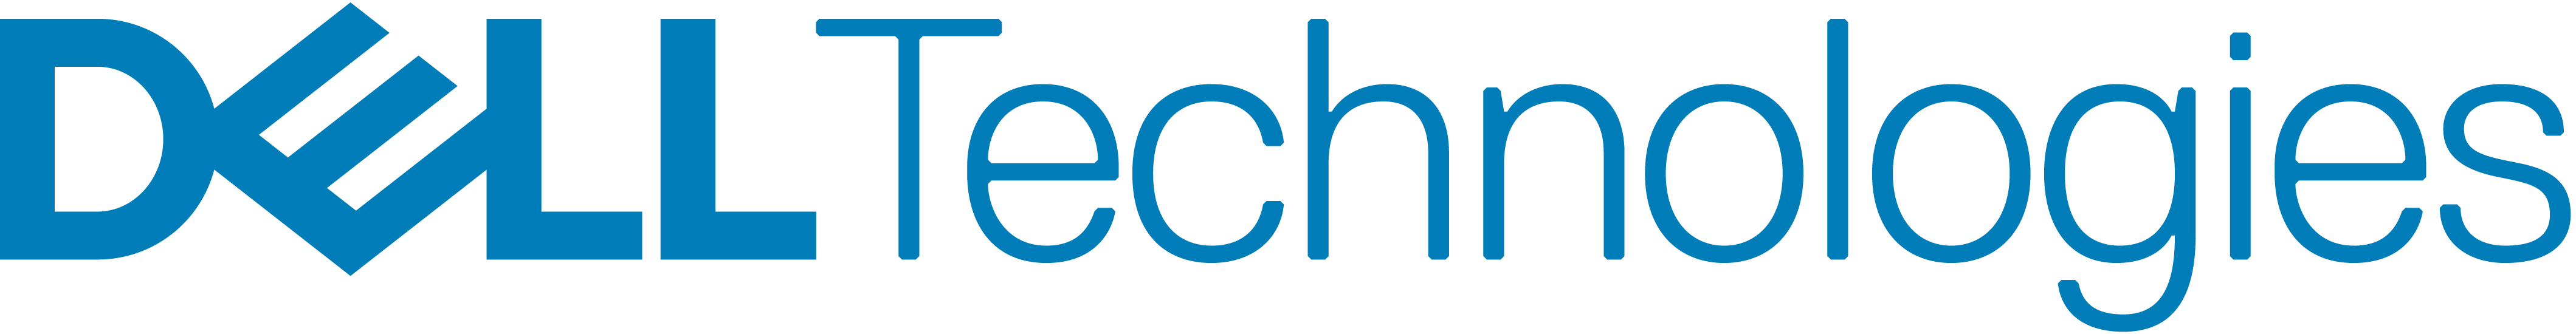 DellTech Logo Prm Blue